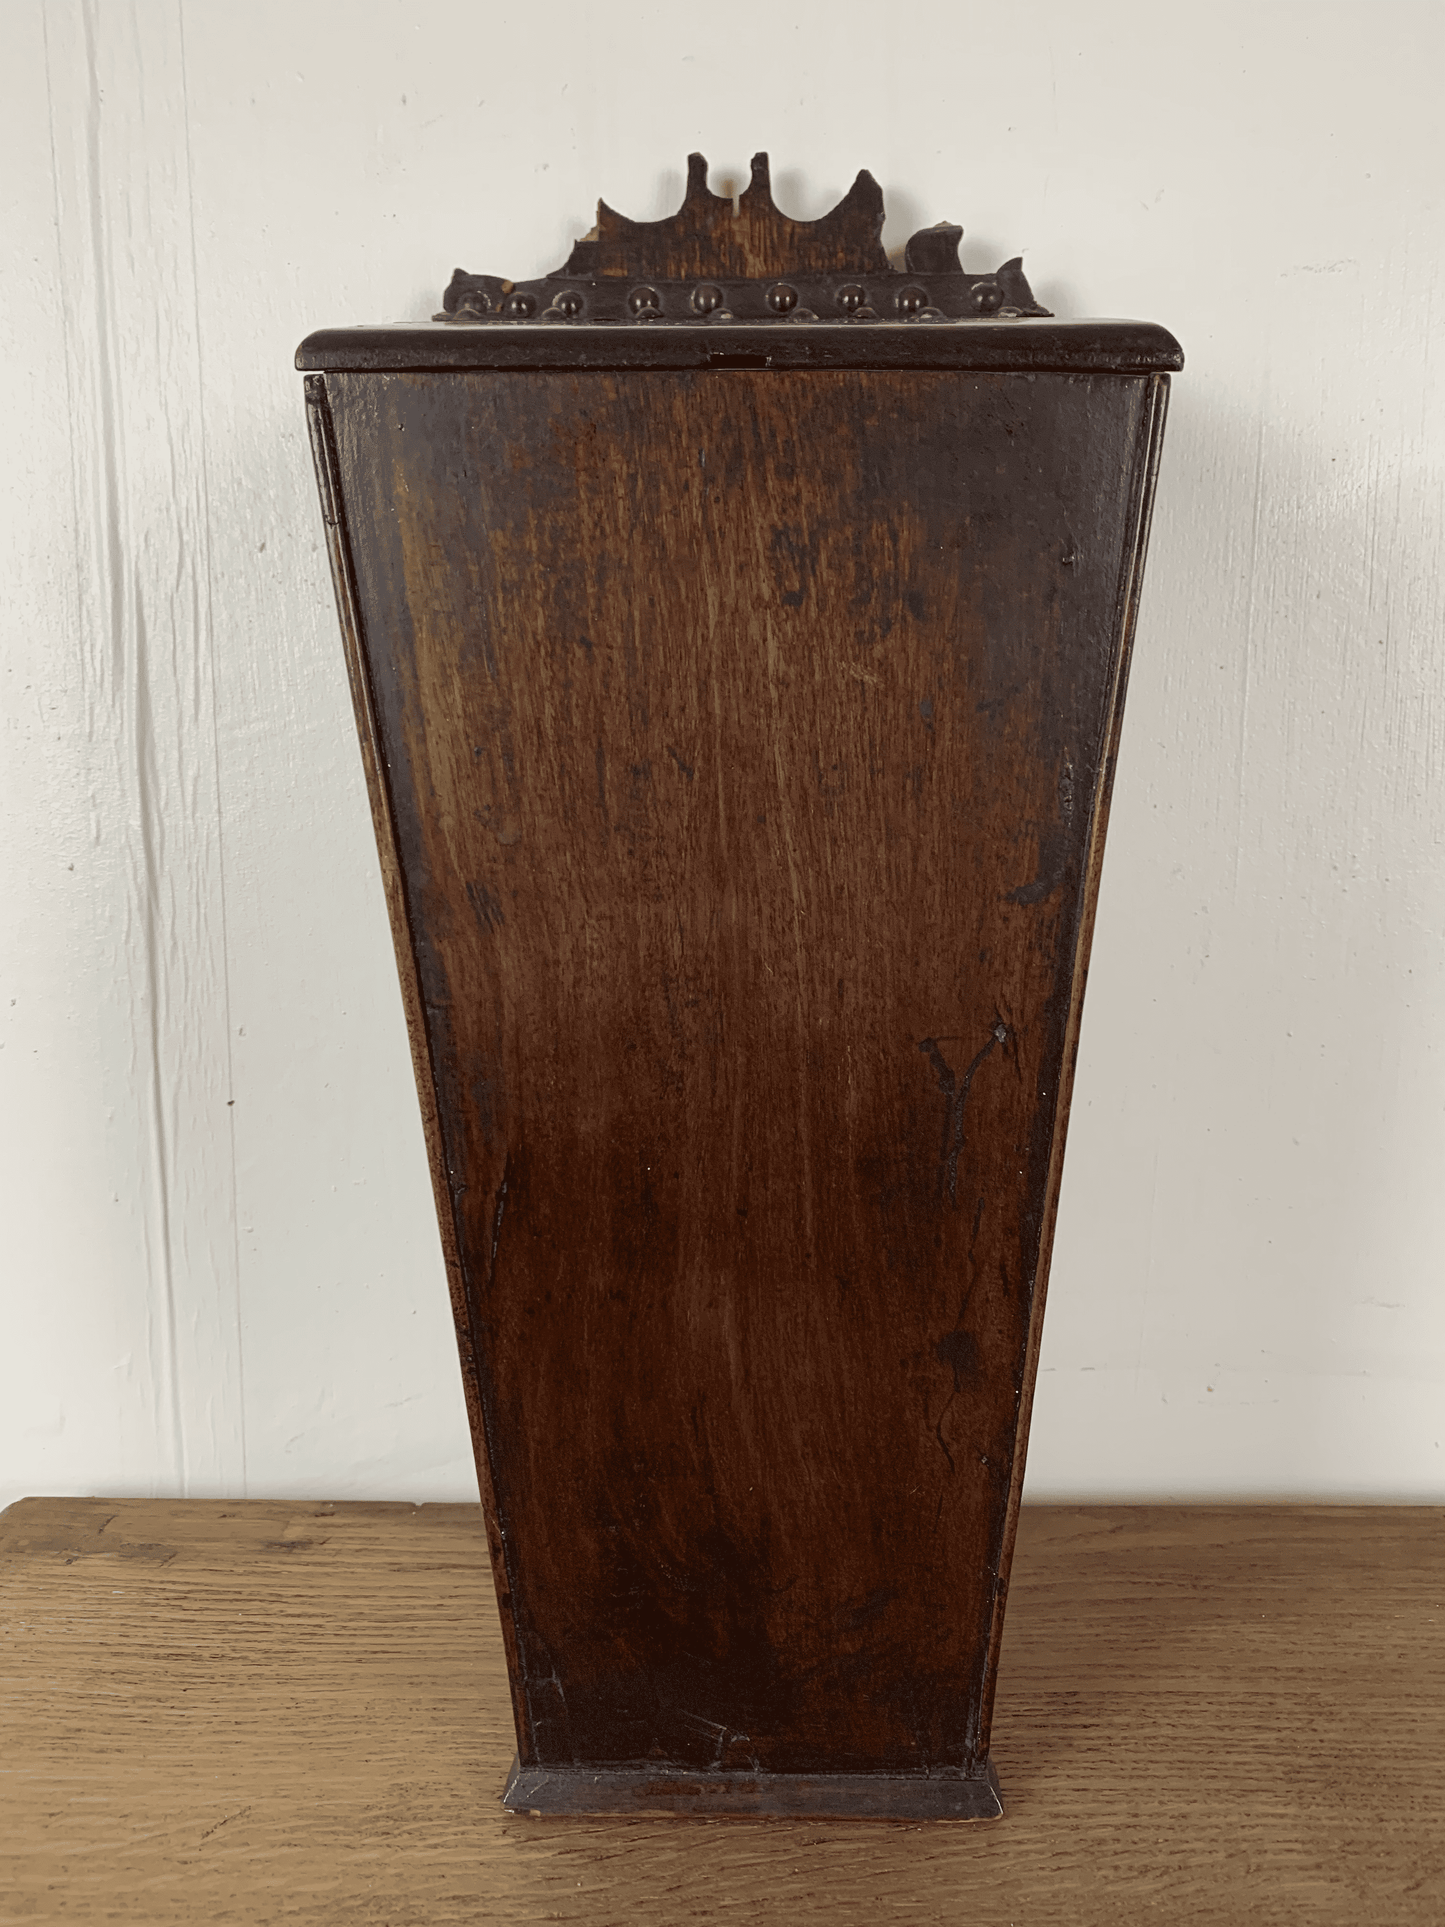 Stylish and Functional: Vintage Fruitwood Candle Storage